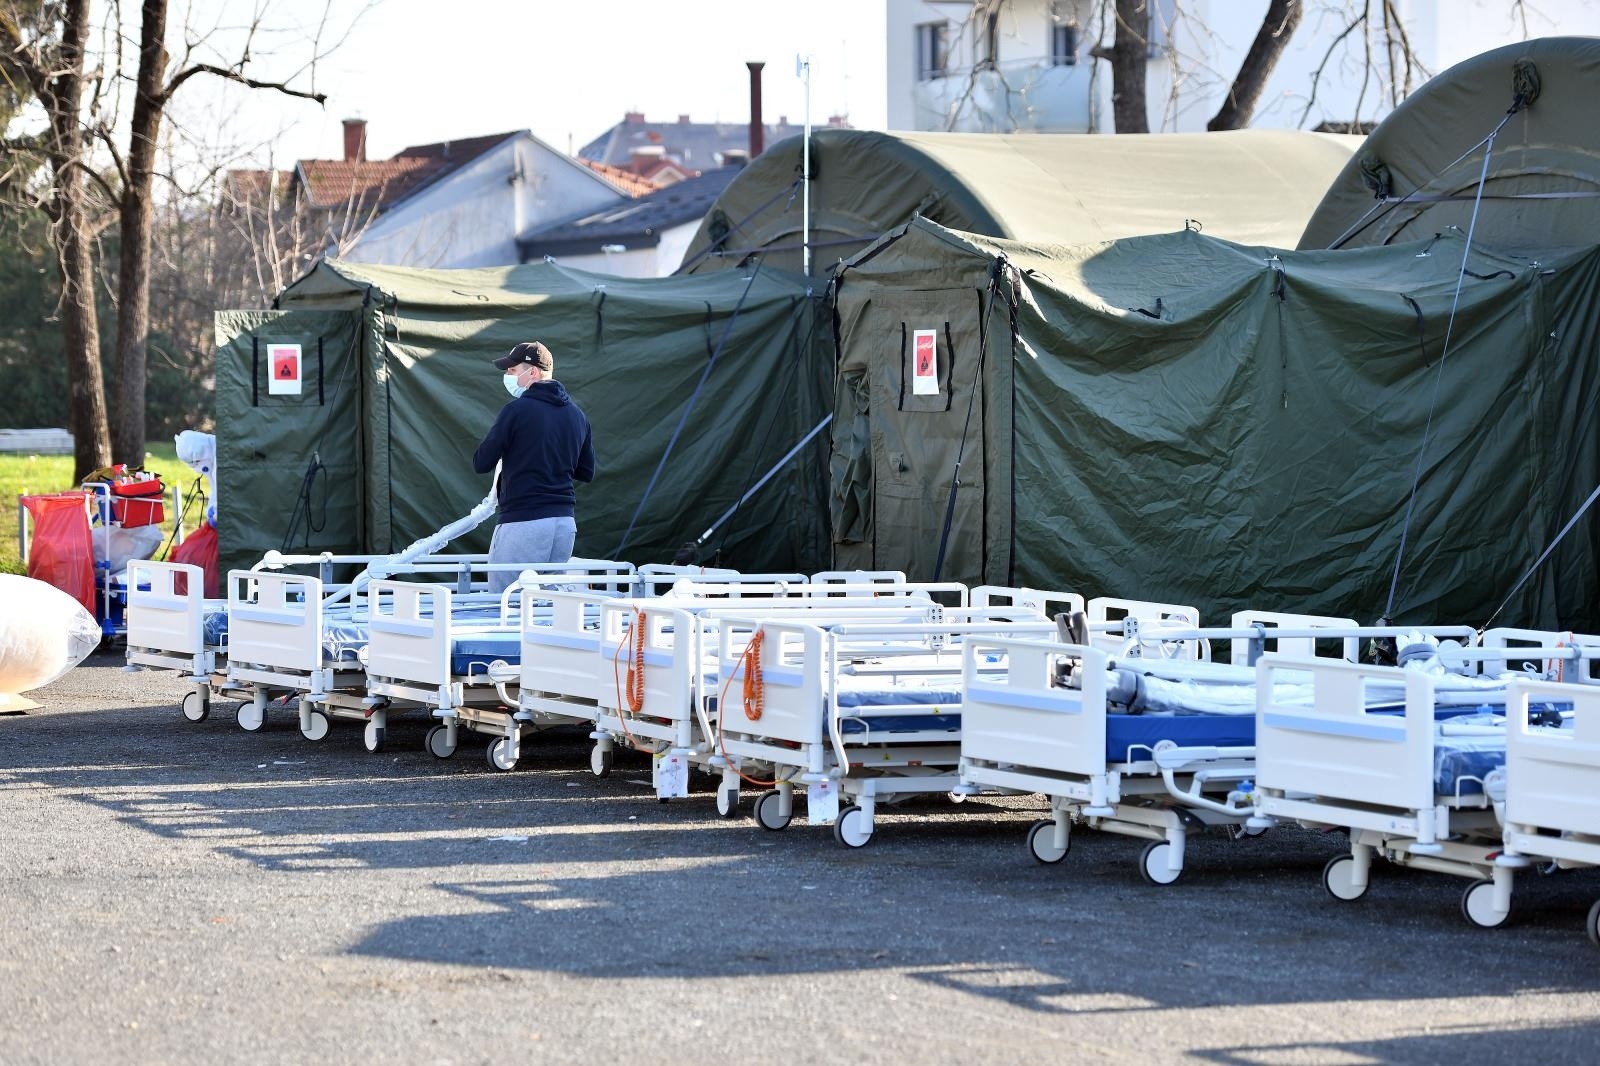 24.11.2020., Varazdin- U Opcu bolnicu Varazdin stigli novi kreveti za Covid-19 pacijente.
Photo: Vjeran Zganec Rogulja/PIXSELL